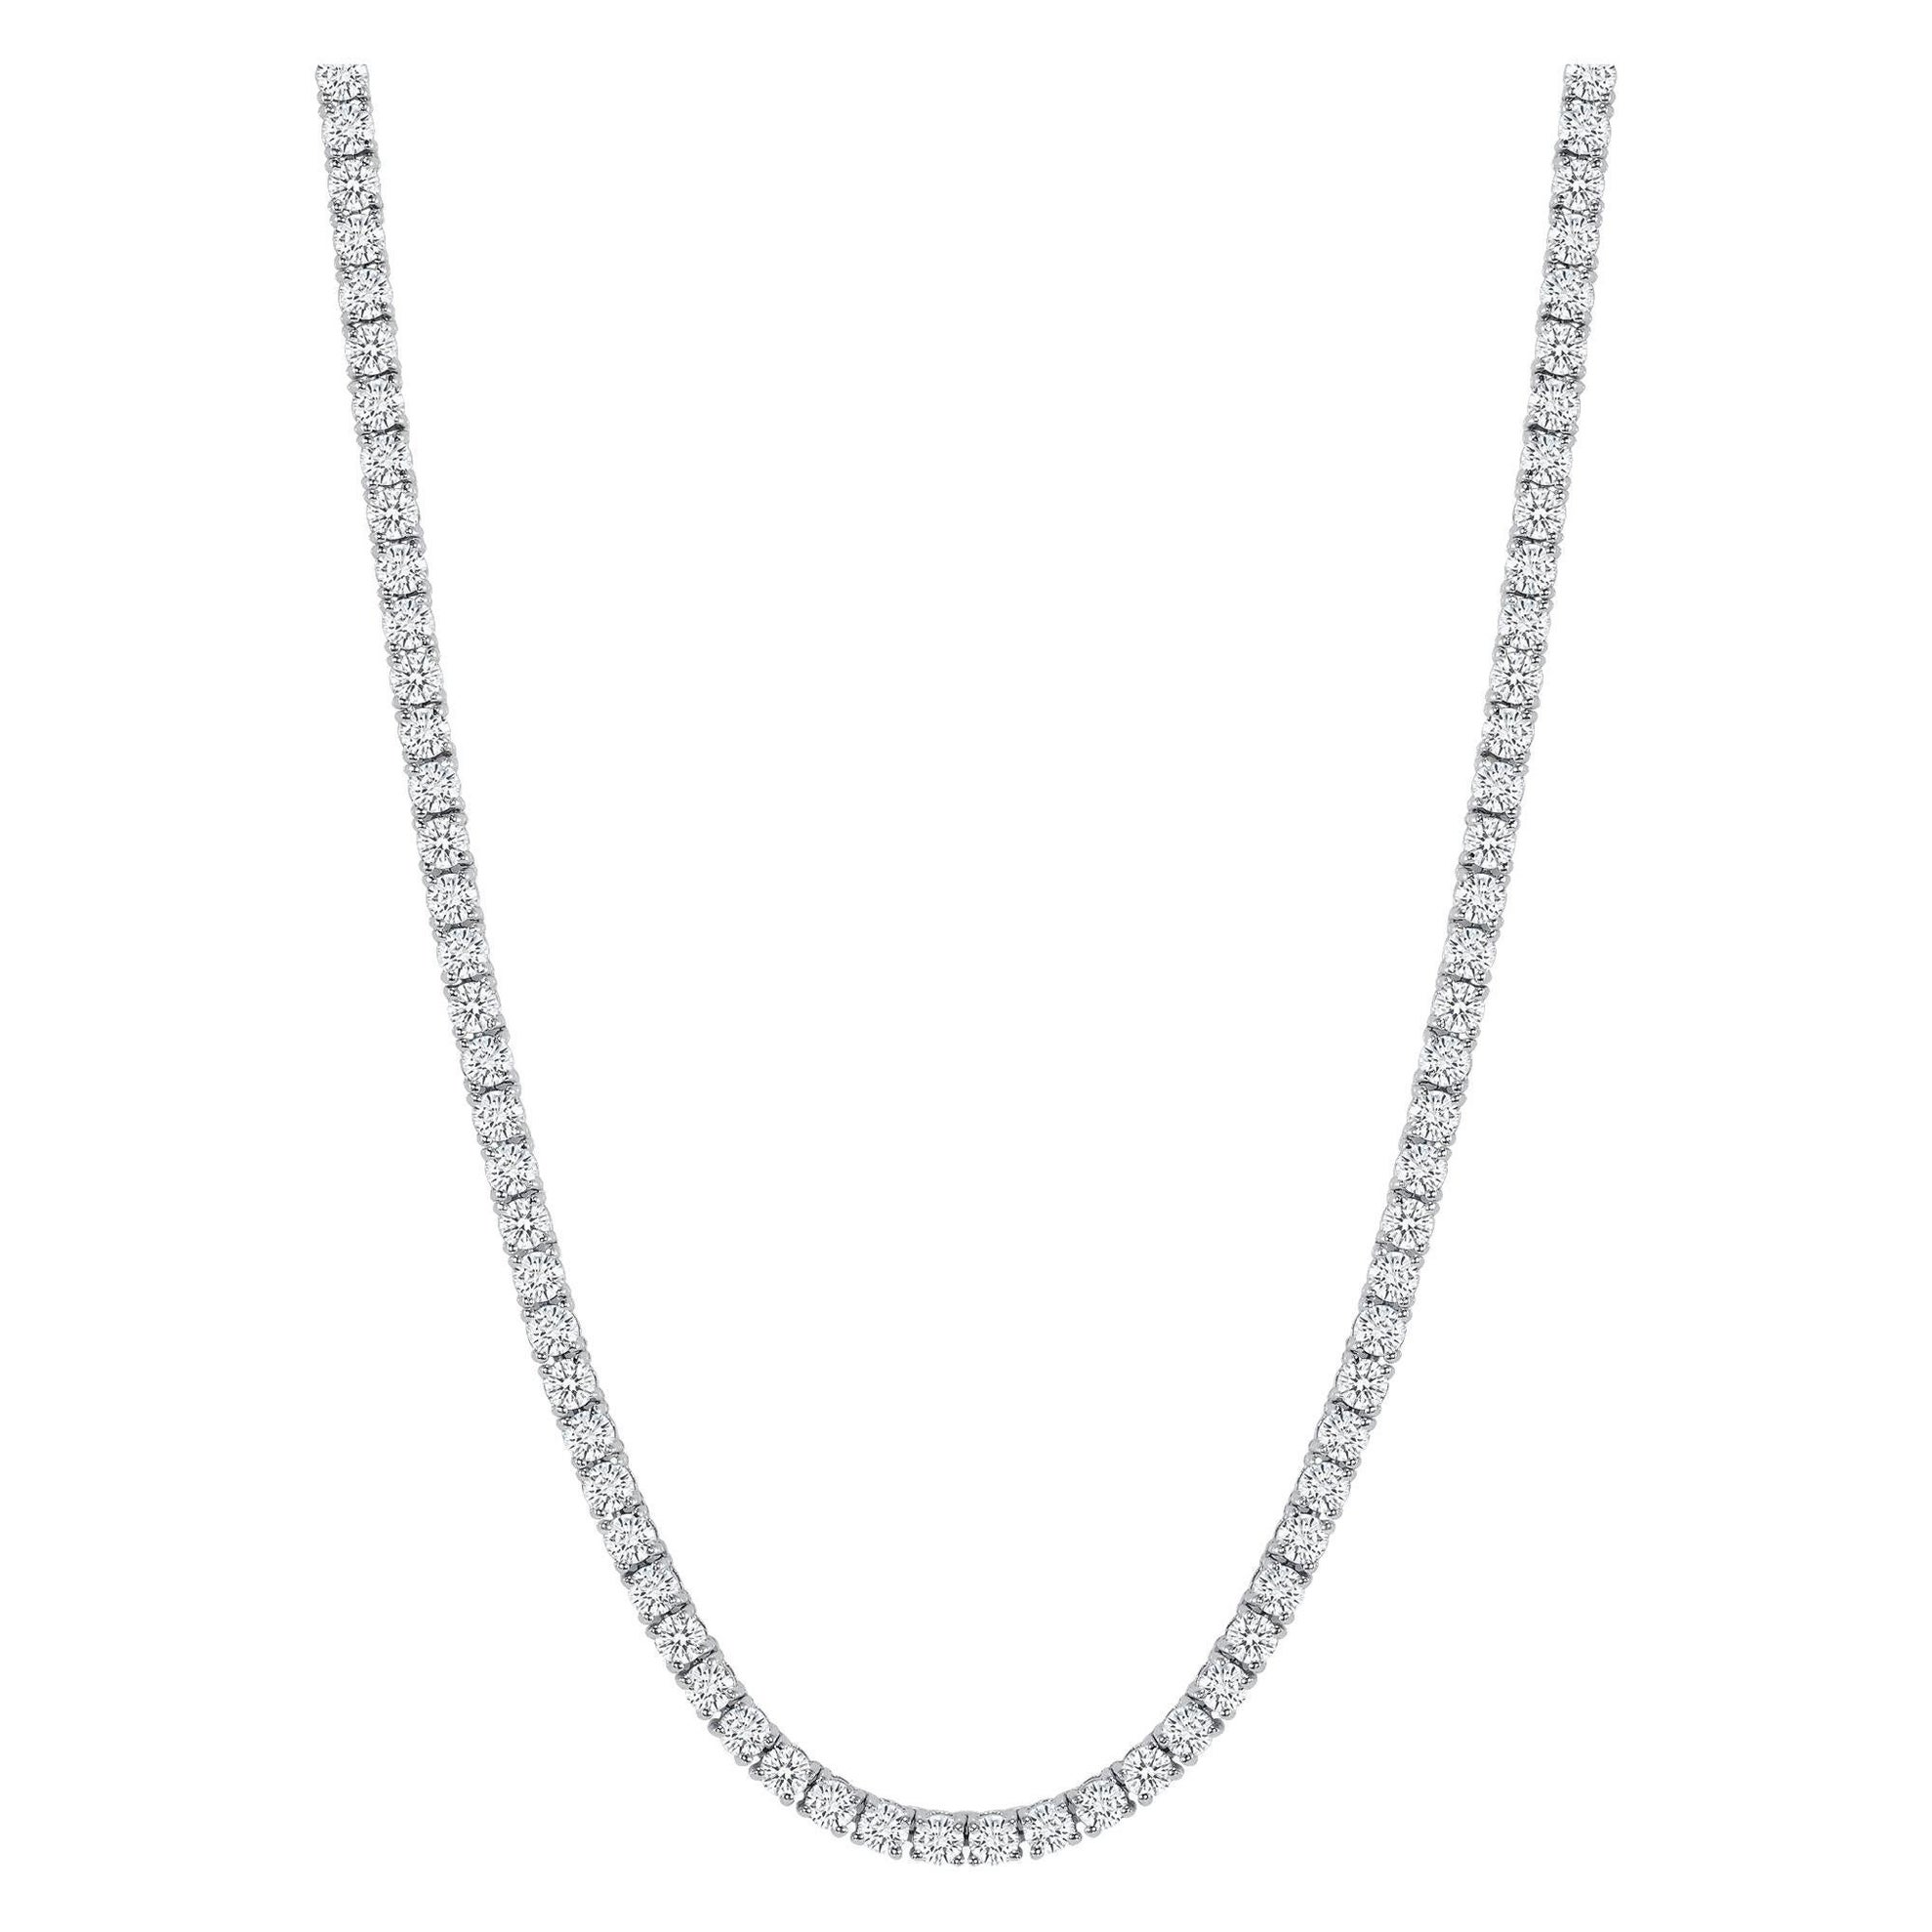 Diamond Tennis Necklace 14k White Gold 7 Carat, Natural Round Diamonds